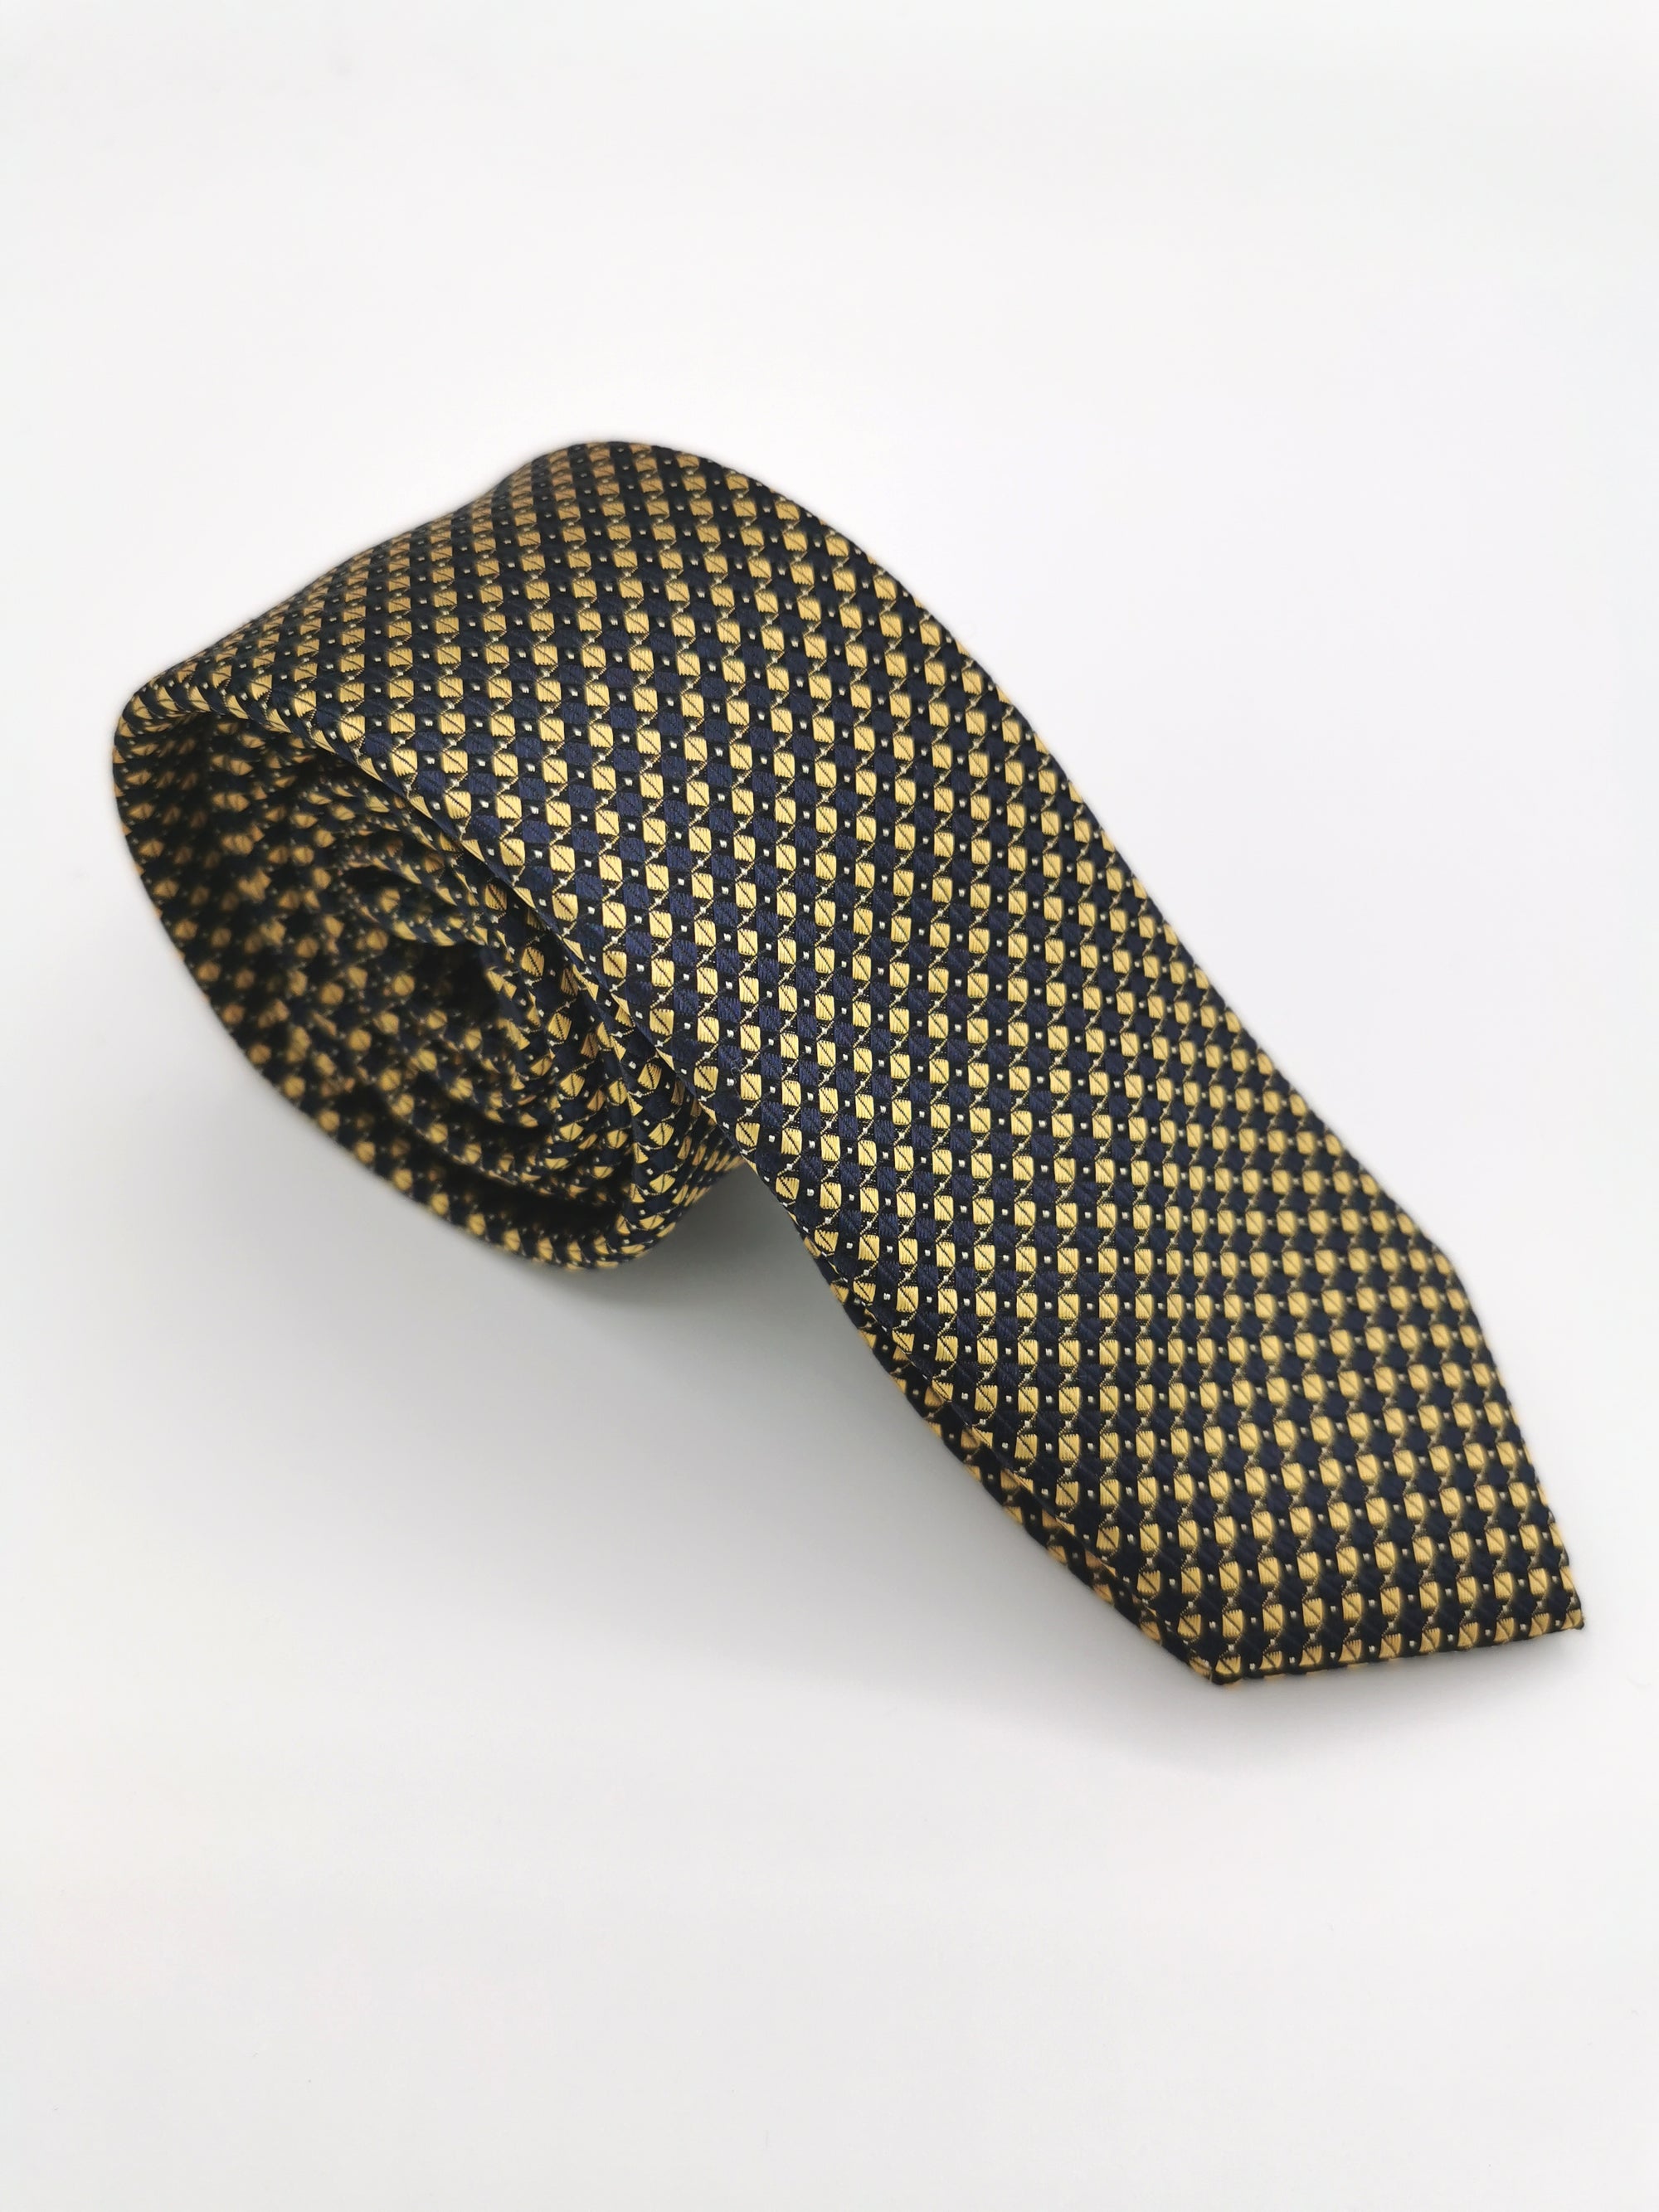 Narrow silk tie with yellow and navy blue diamonds